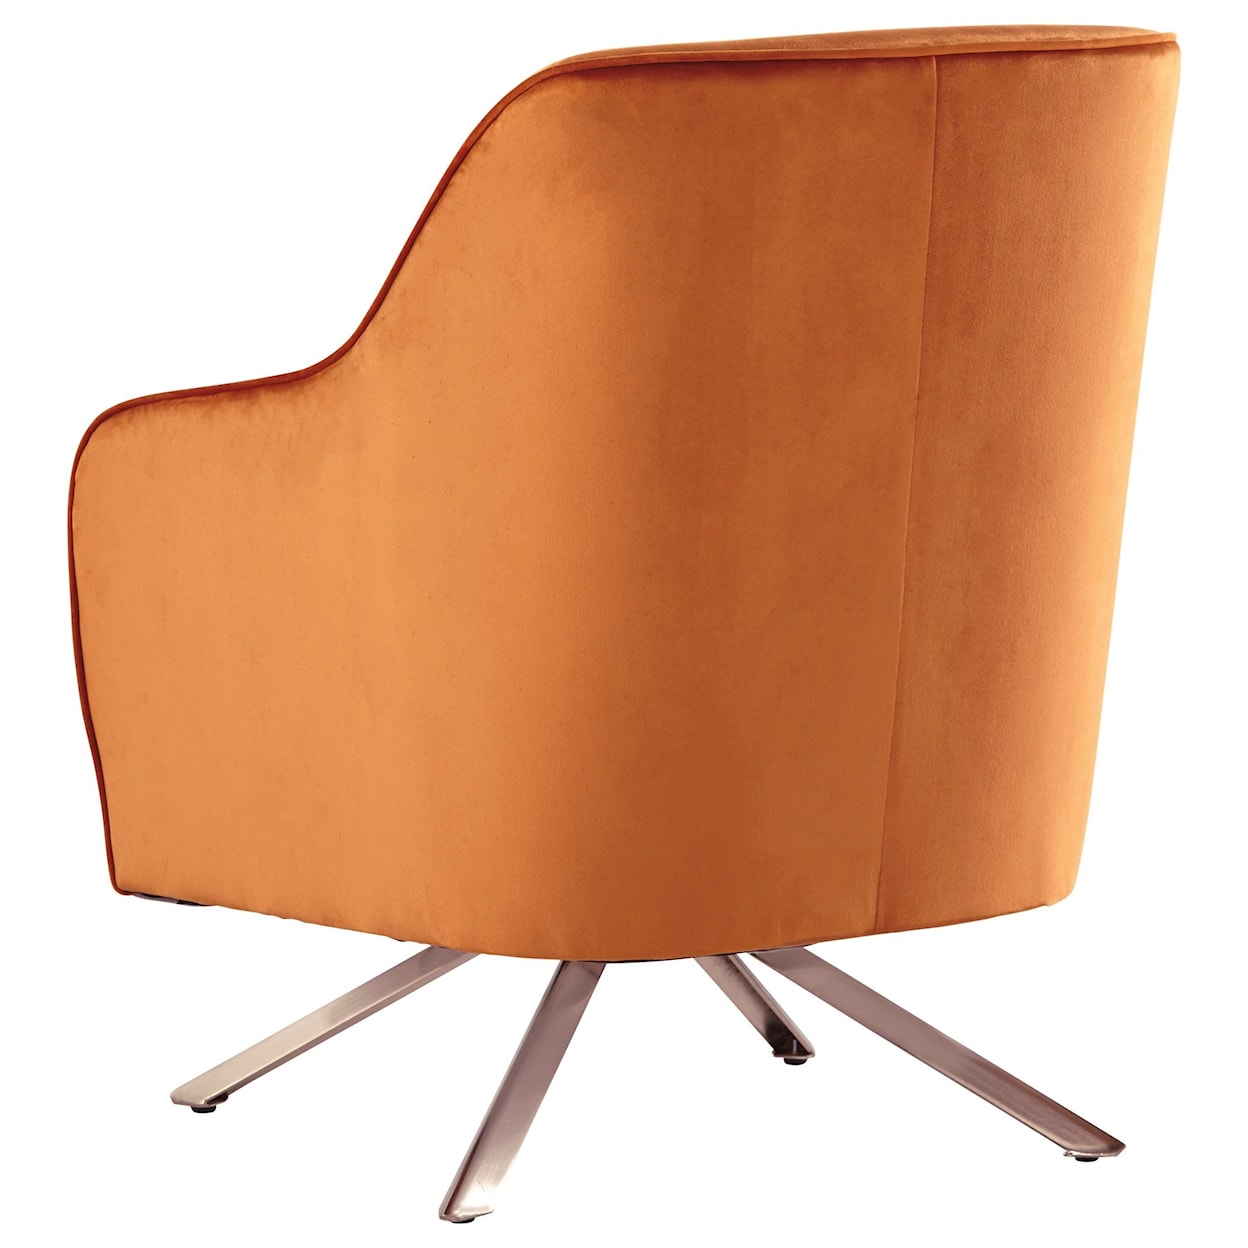 Ashley Furniture Signature Design Hangar Accent Chair